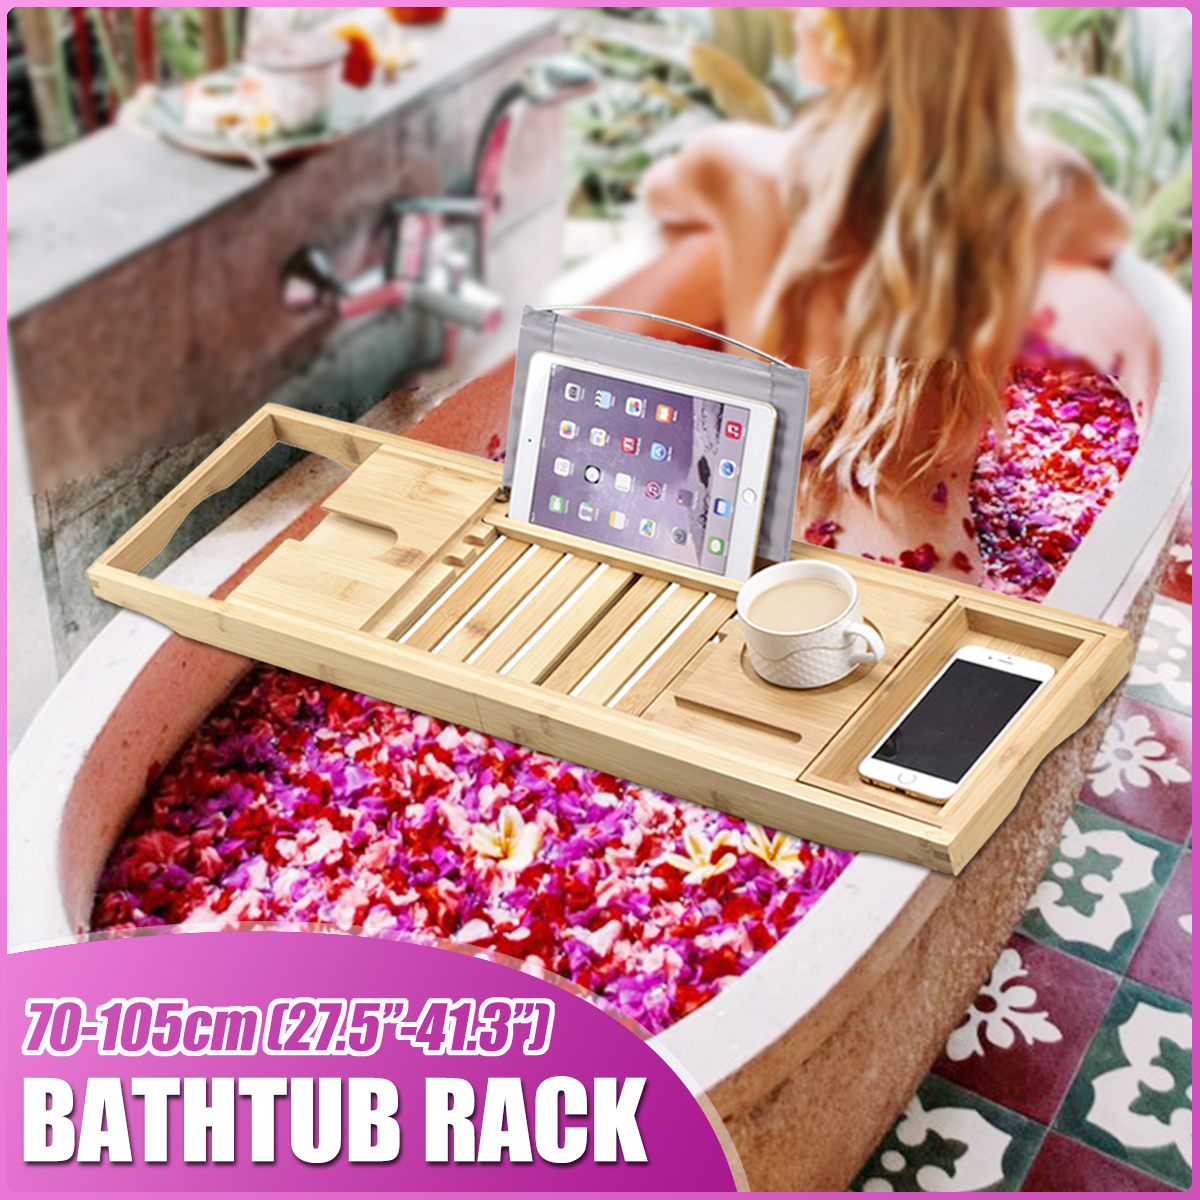 Luxury-Adjustable-Bathtub-Rack-Bamboo-Caddy-Shelf-Shower-Tub-Tray-Towel-Mobile-Phone-Tablet-Holder-S-1827352-1